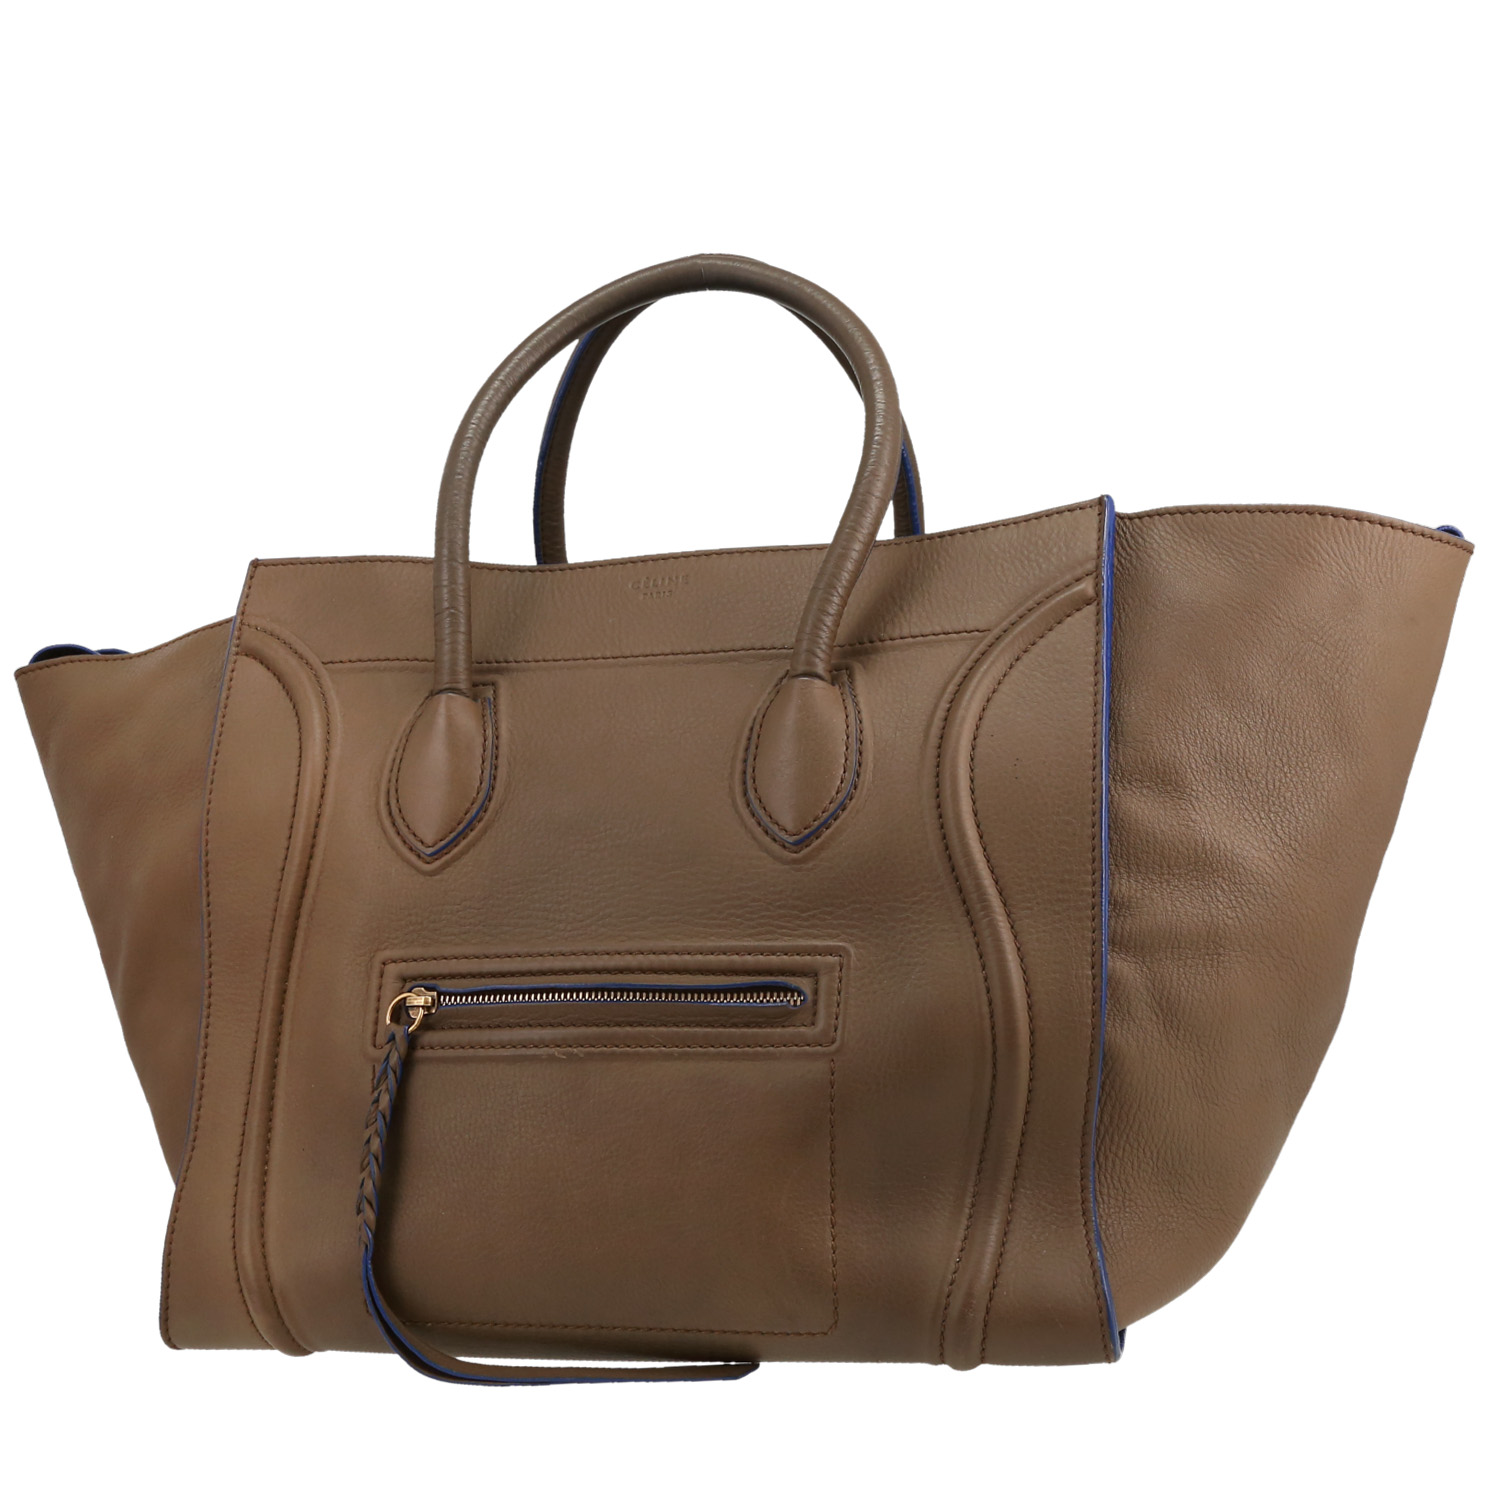 Luggage Medium Model Handbag In Taupe Leather